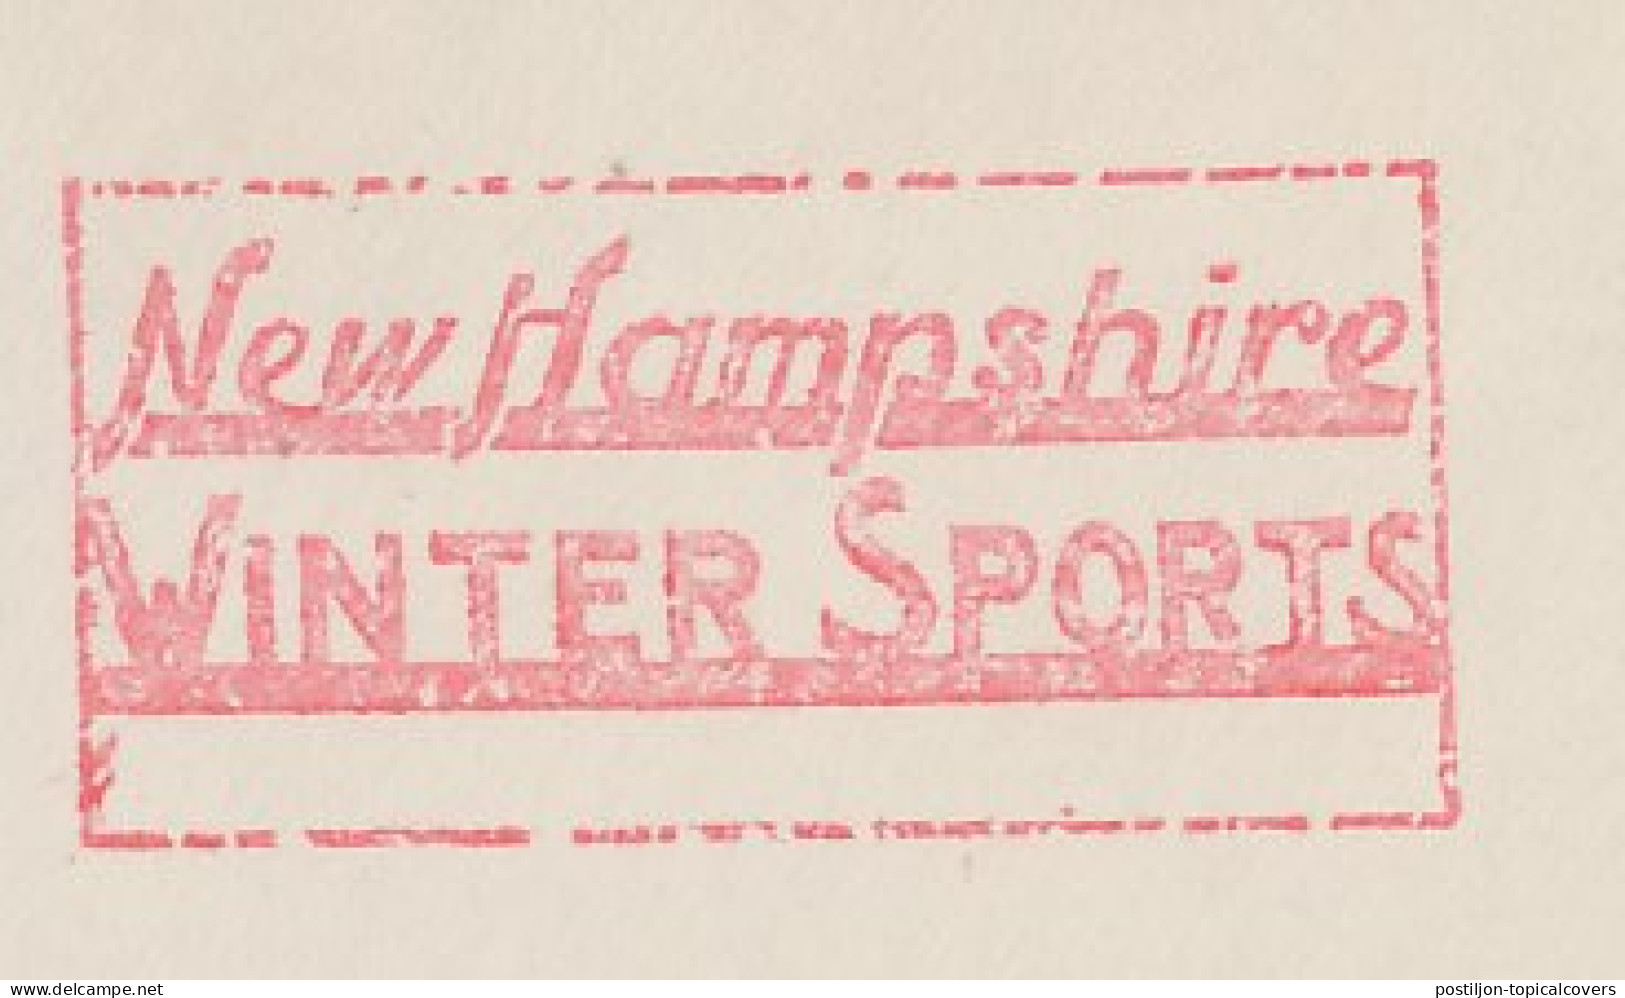 Meter Top Cut USA 1937 Winter Sports - New Hampshire - Invierno